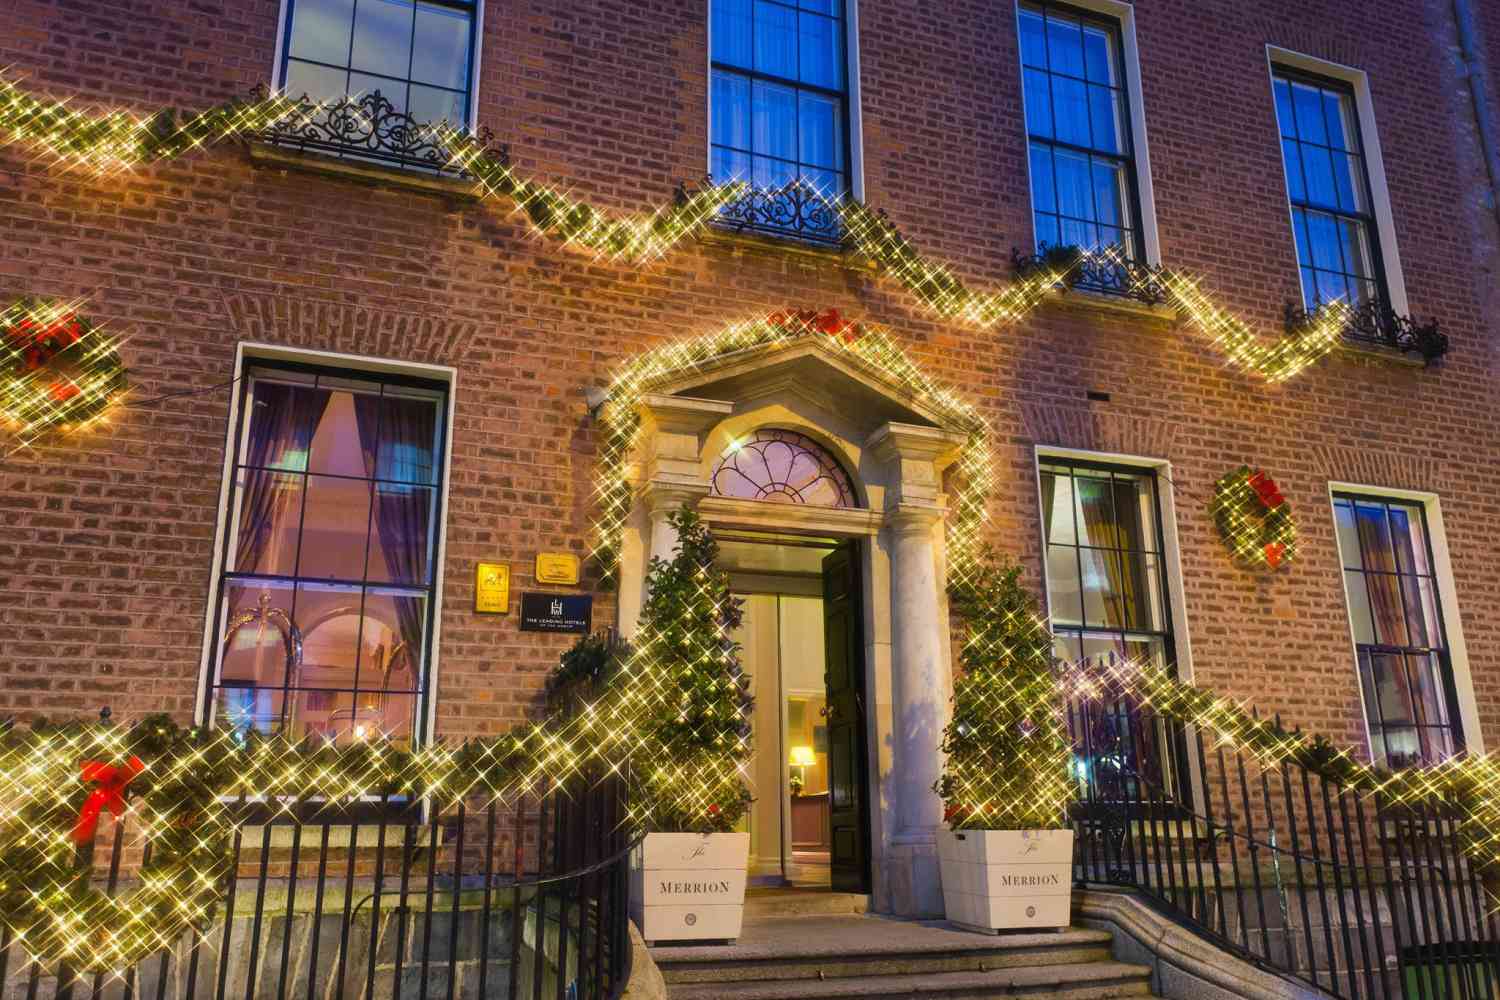 The Merrion Hotel Dublin - Ireland